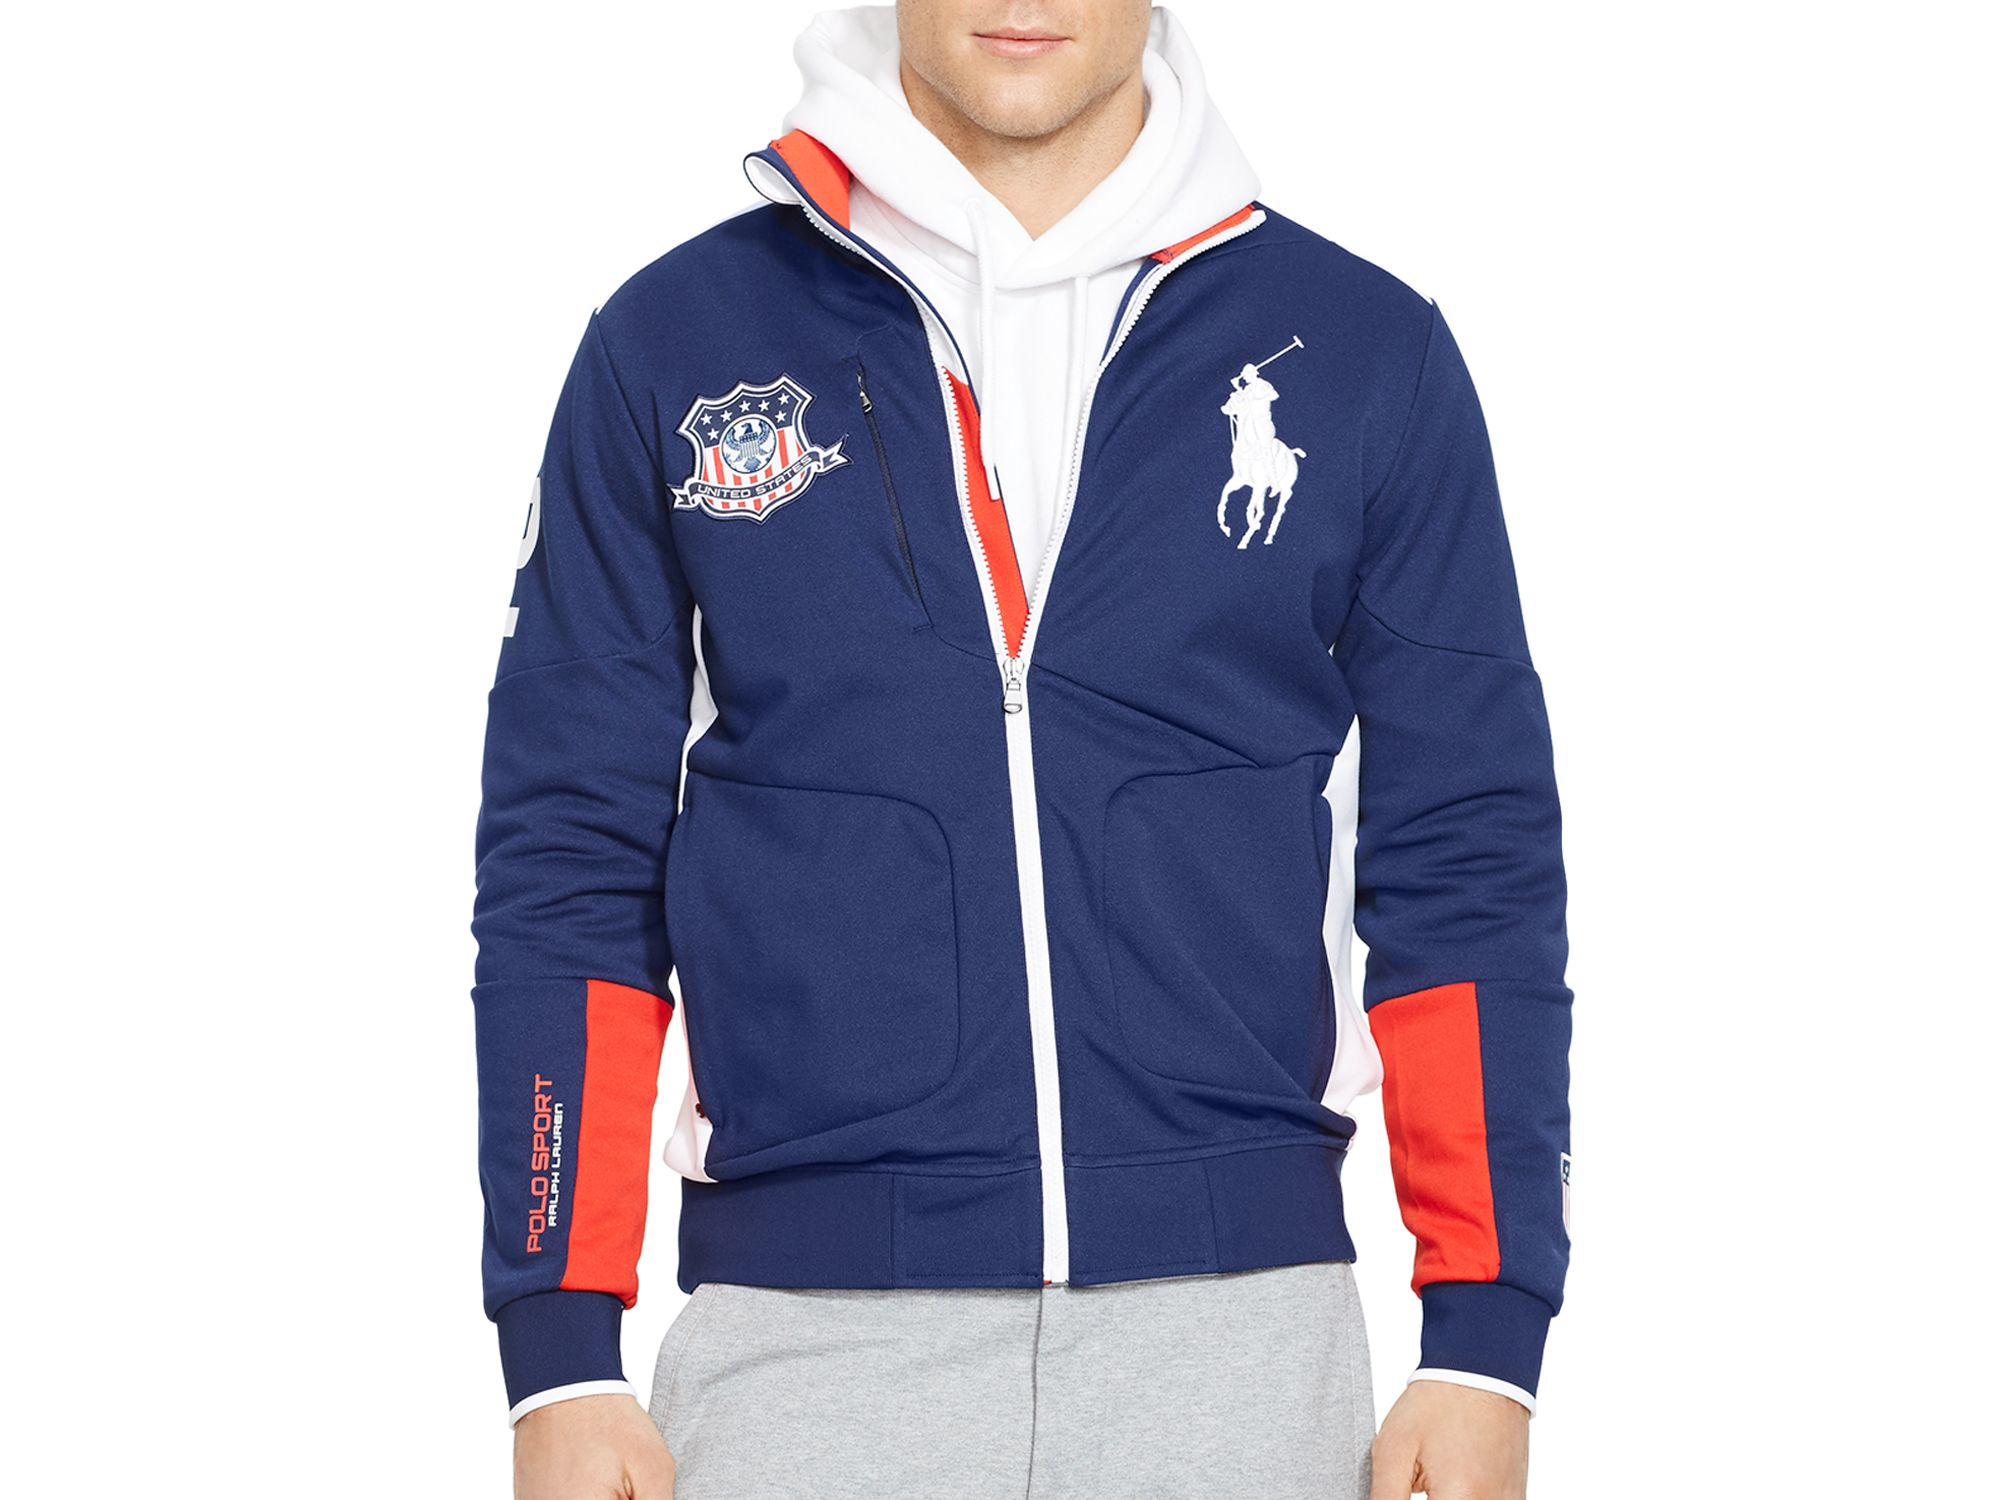 polo sport track jacket